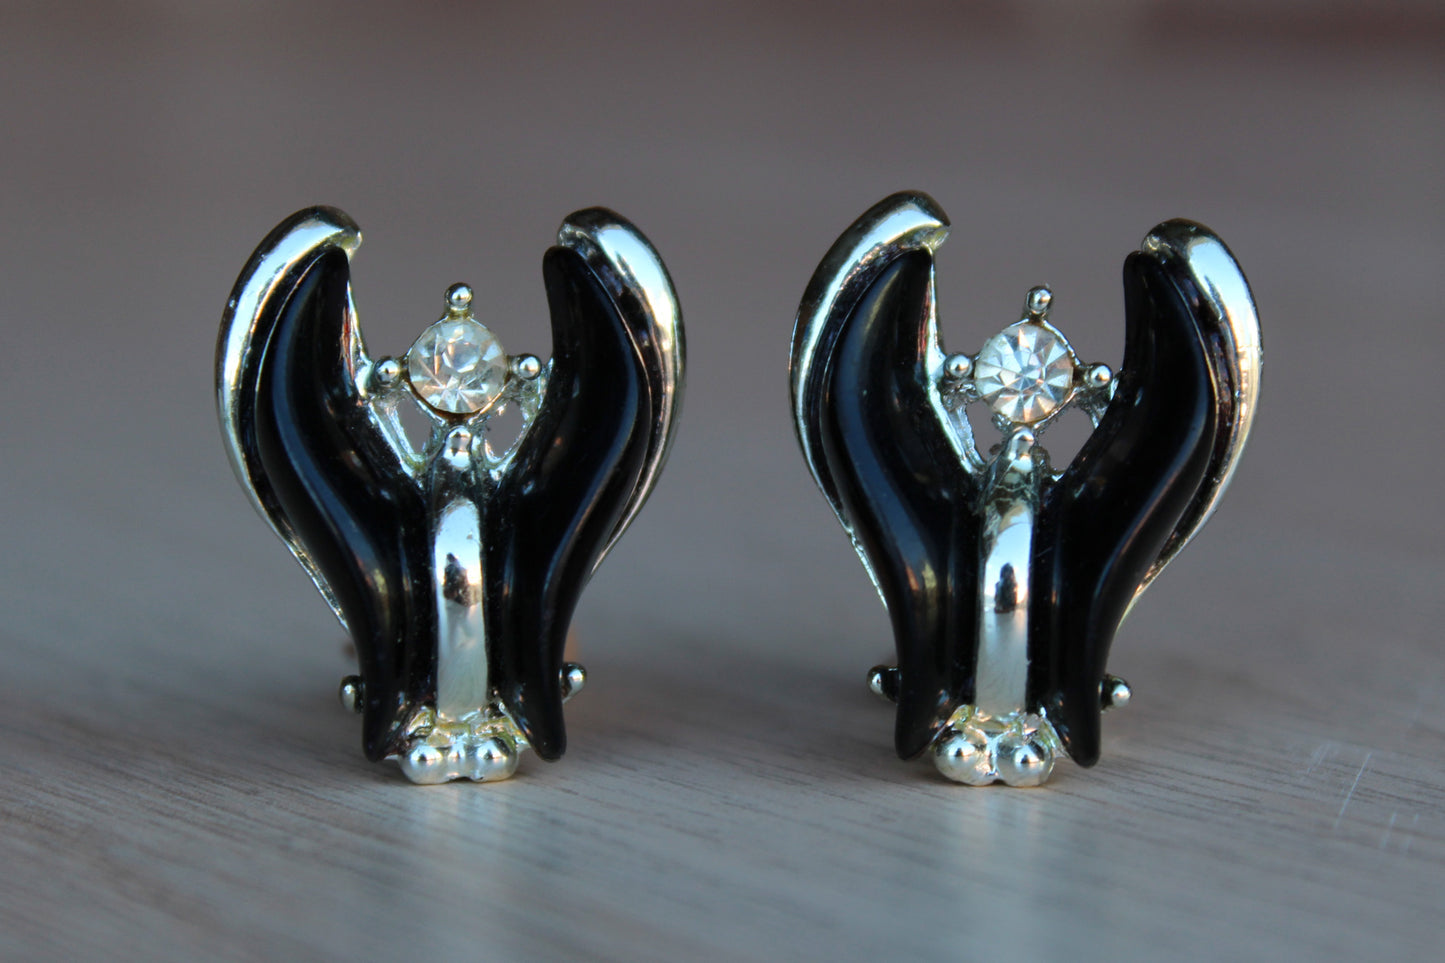 Black Plastic and Silver Rhinestone Non-Pierced Earrings